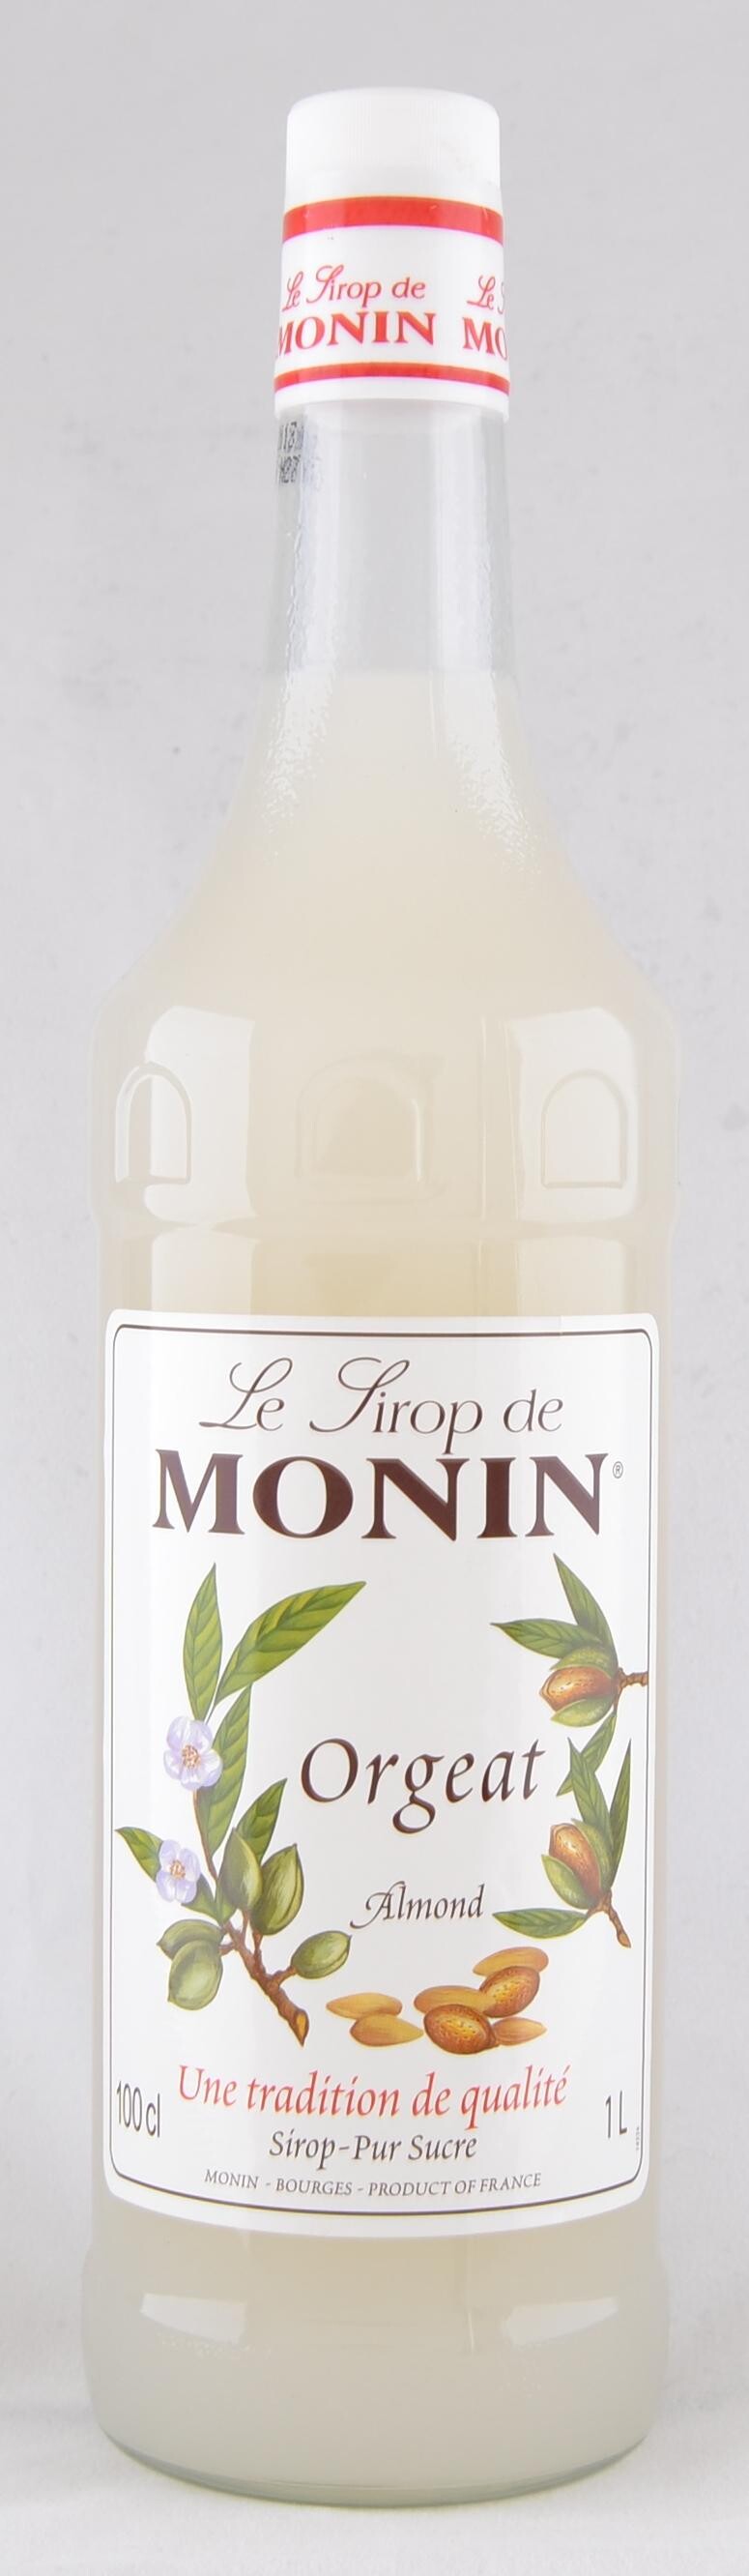 Monin almond syrup Orgeat 1L 0%